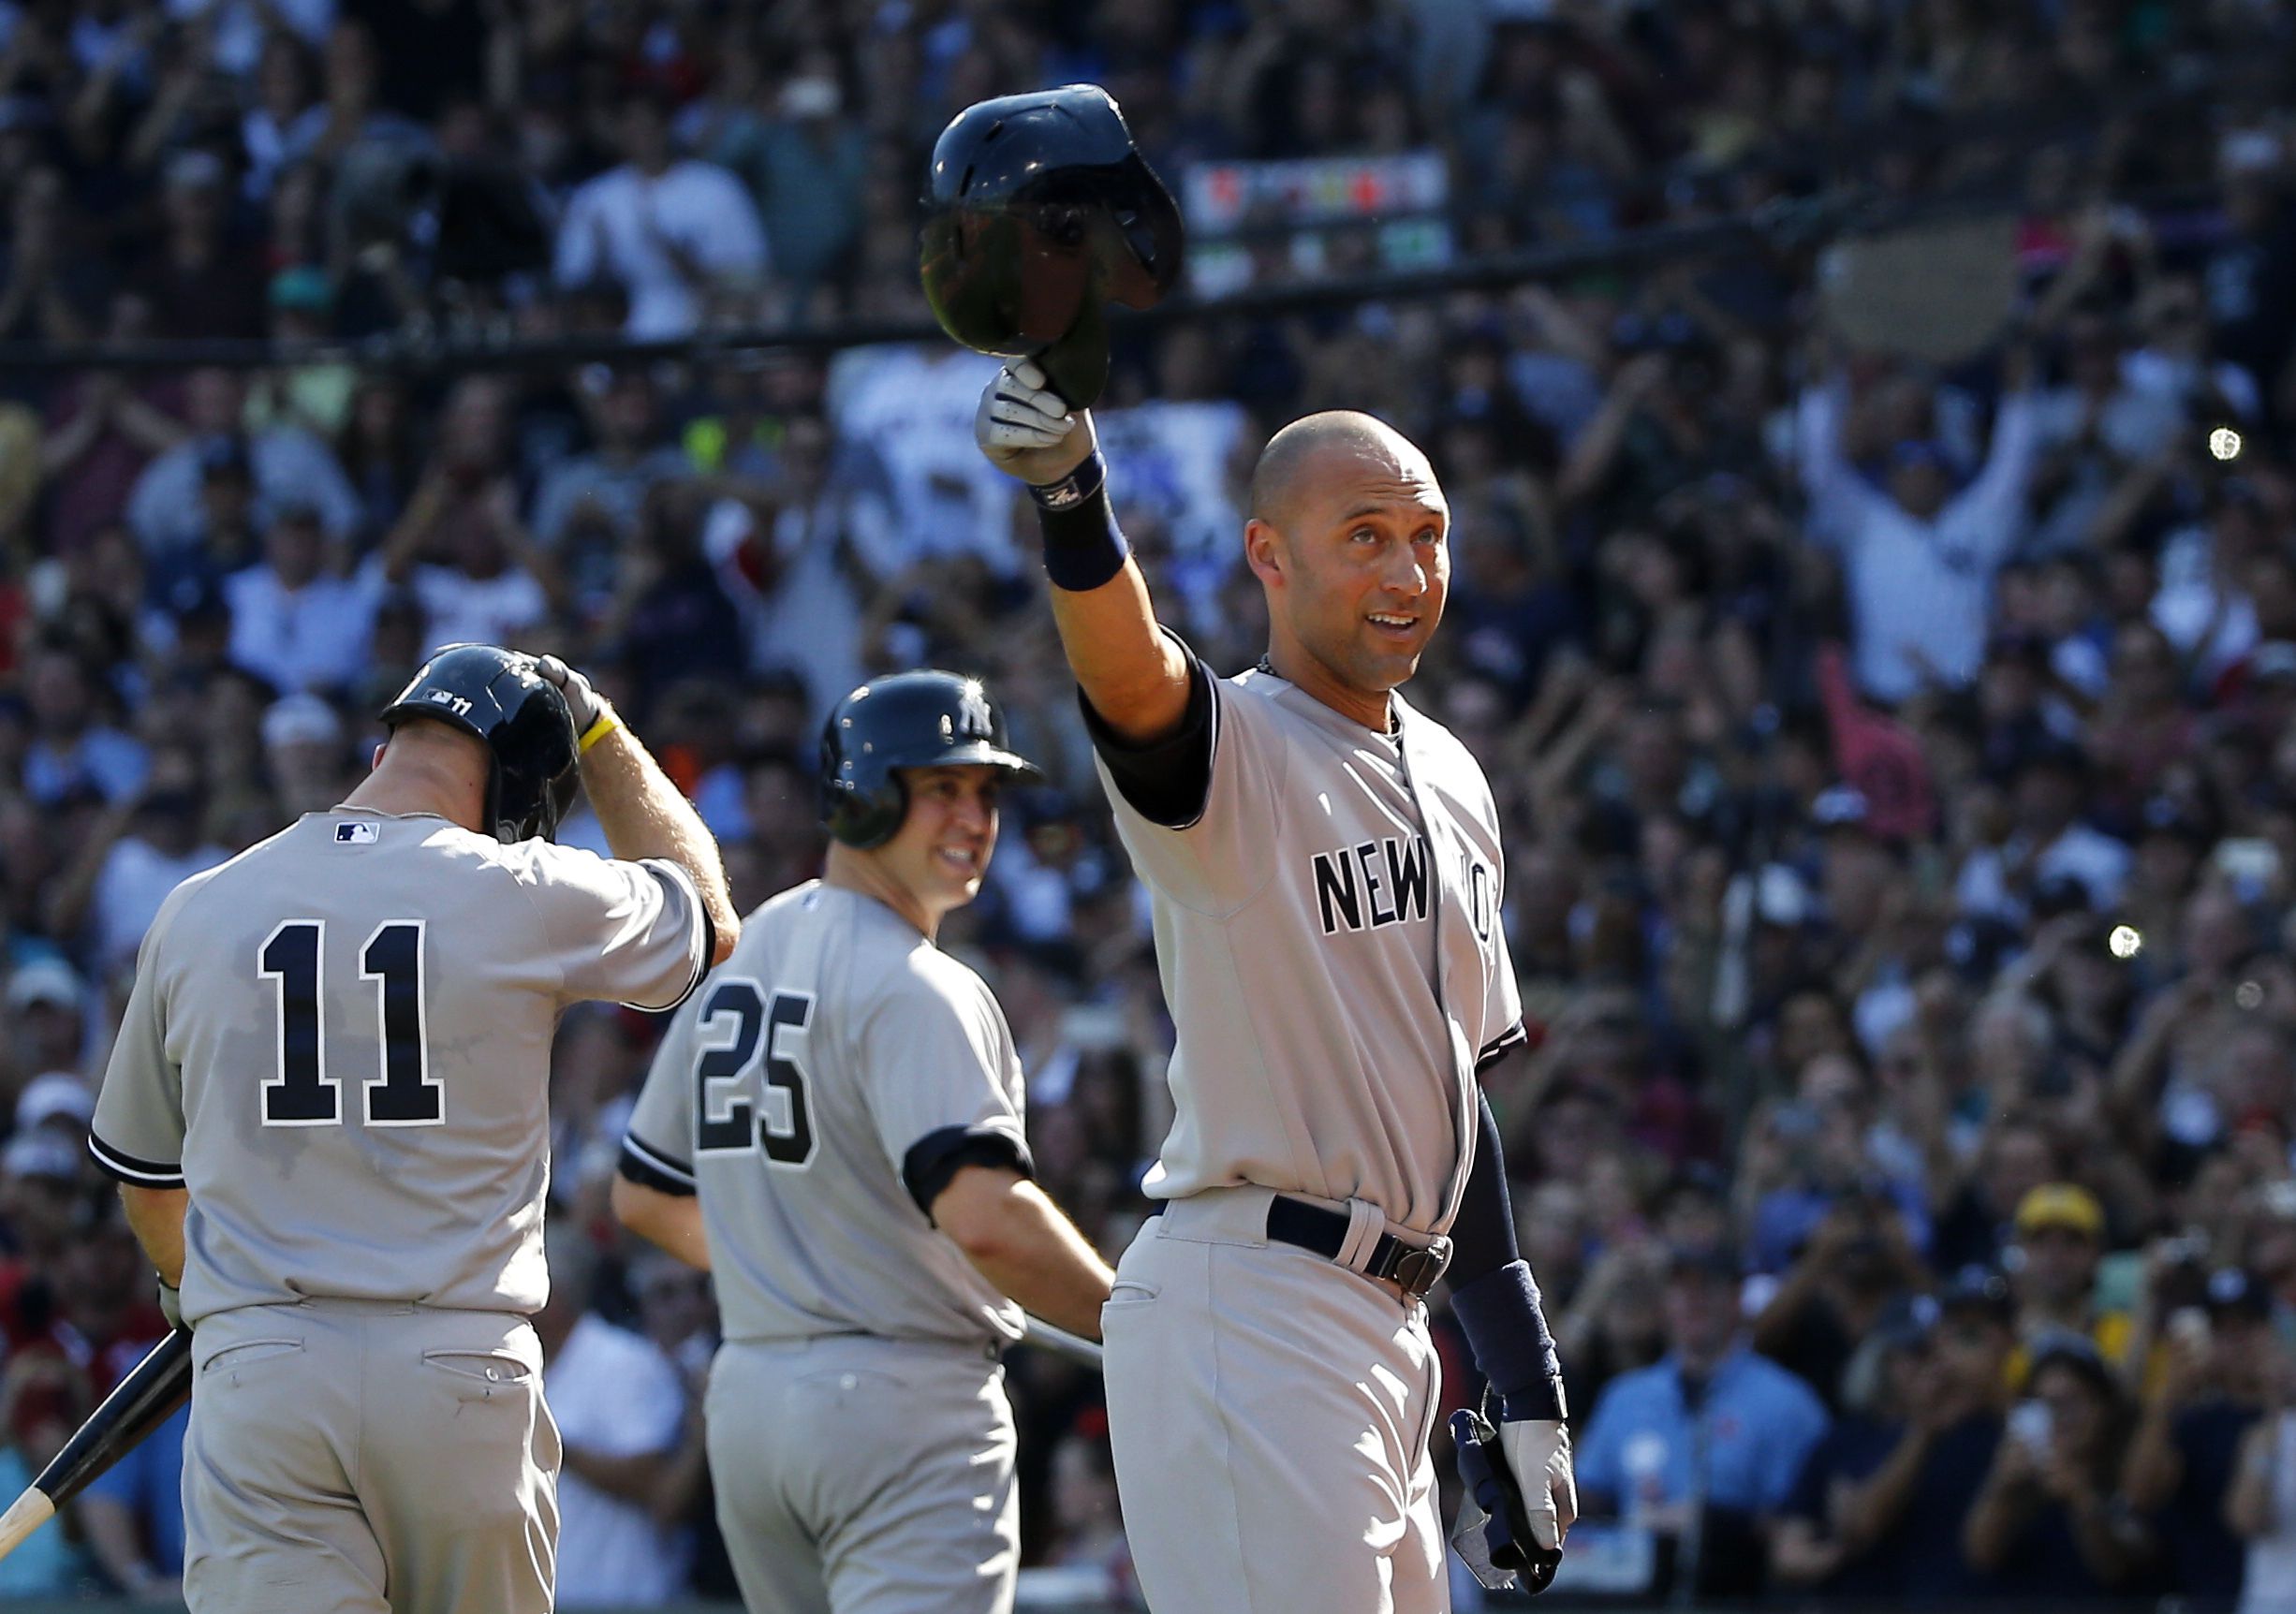 Derek Jeter's Yankees teammates congratulate Hall of Fame